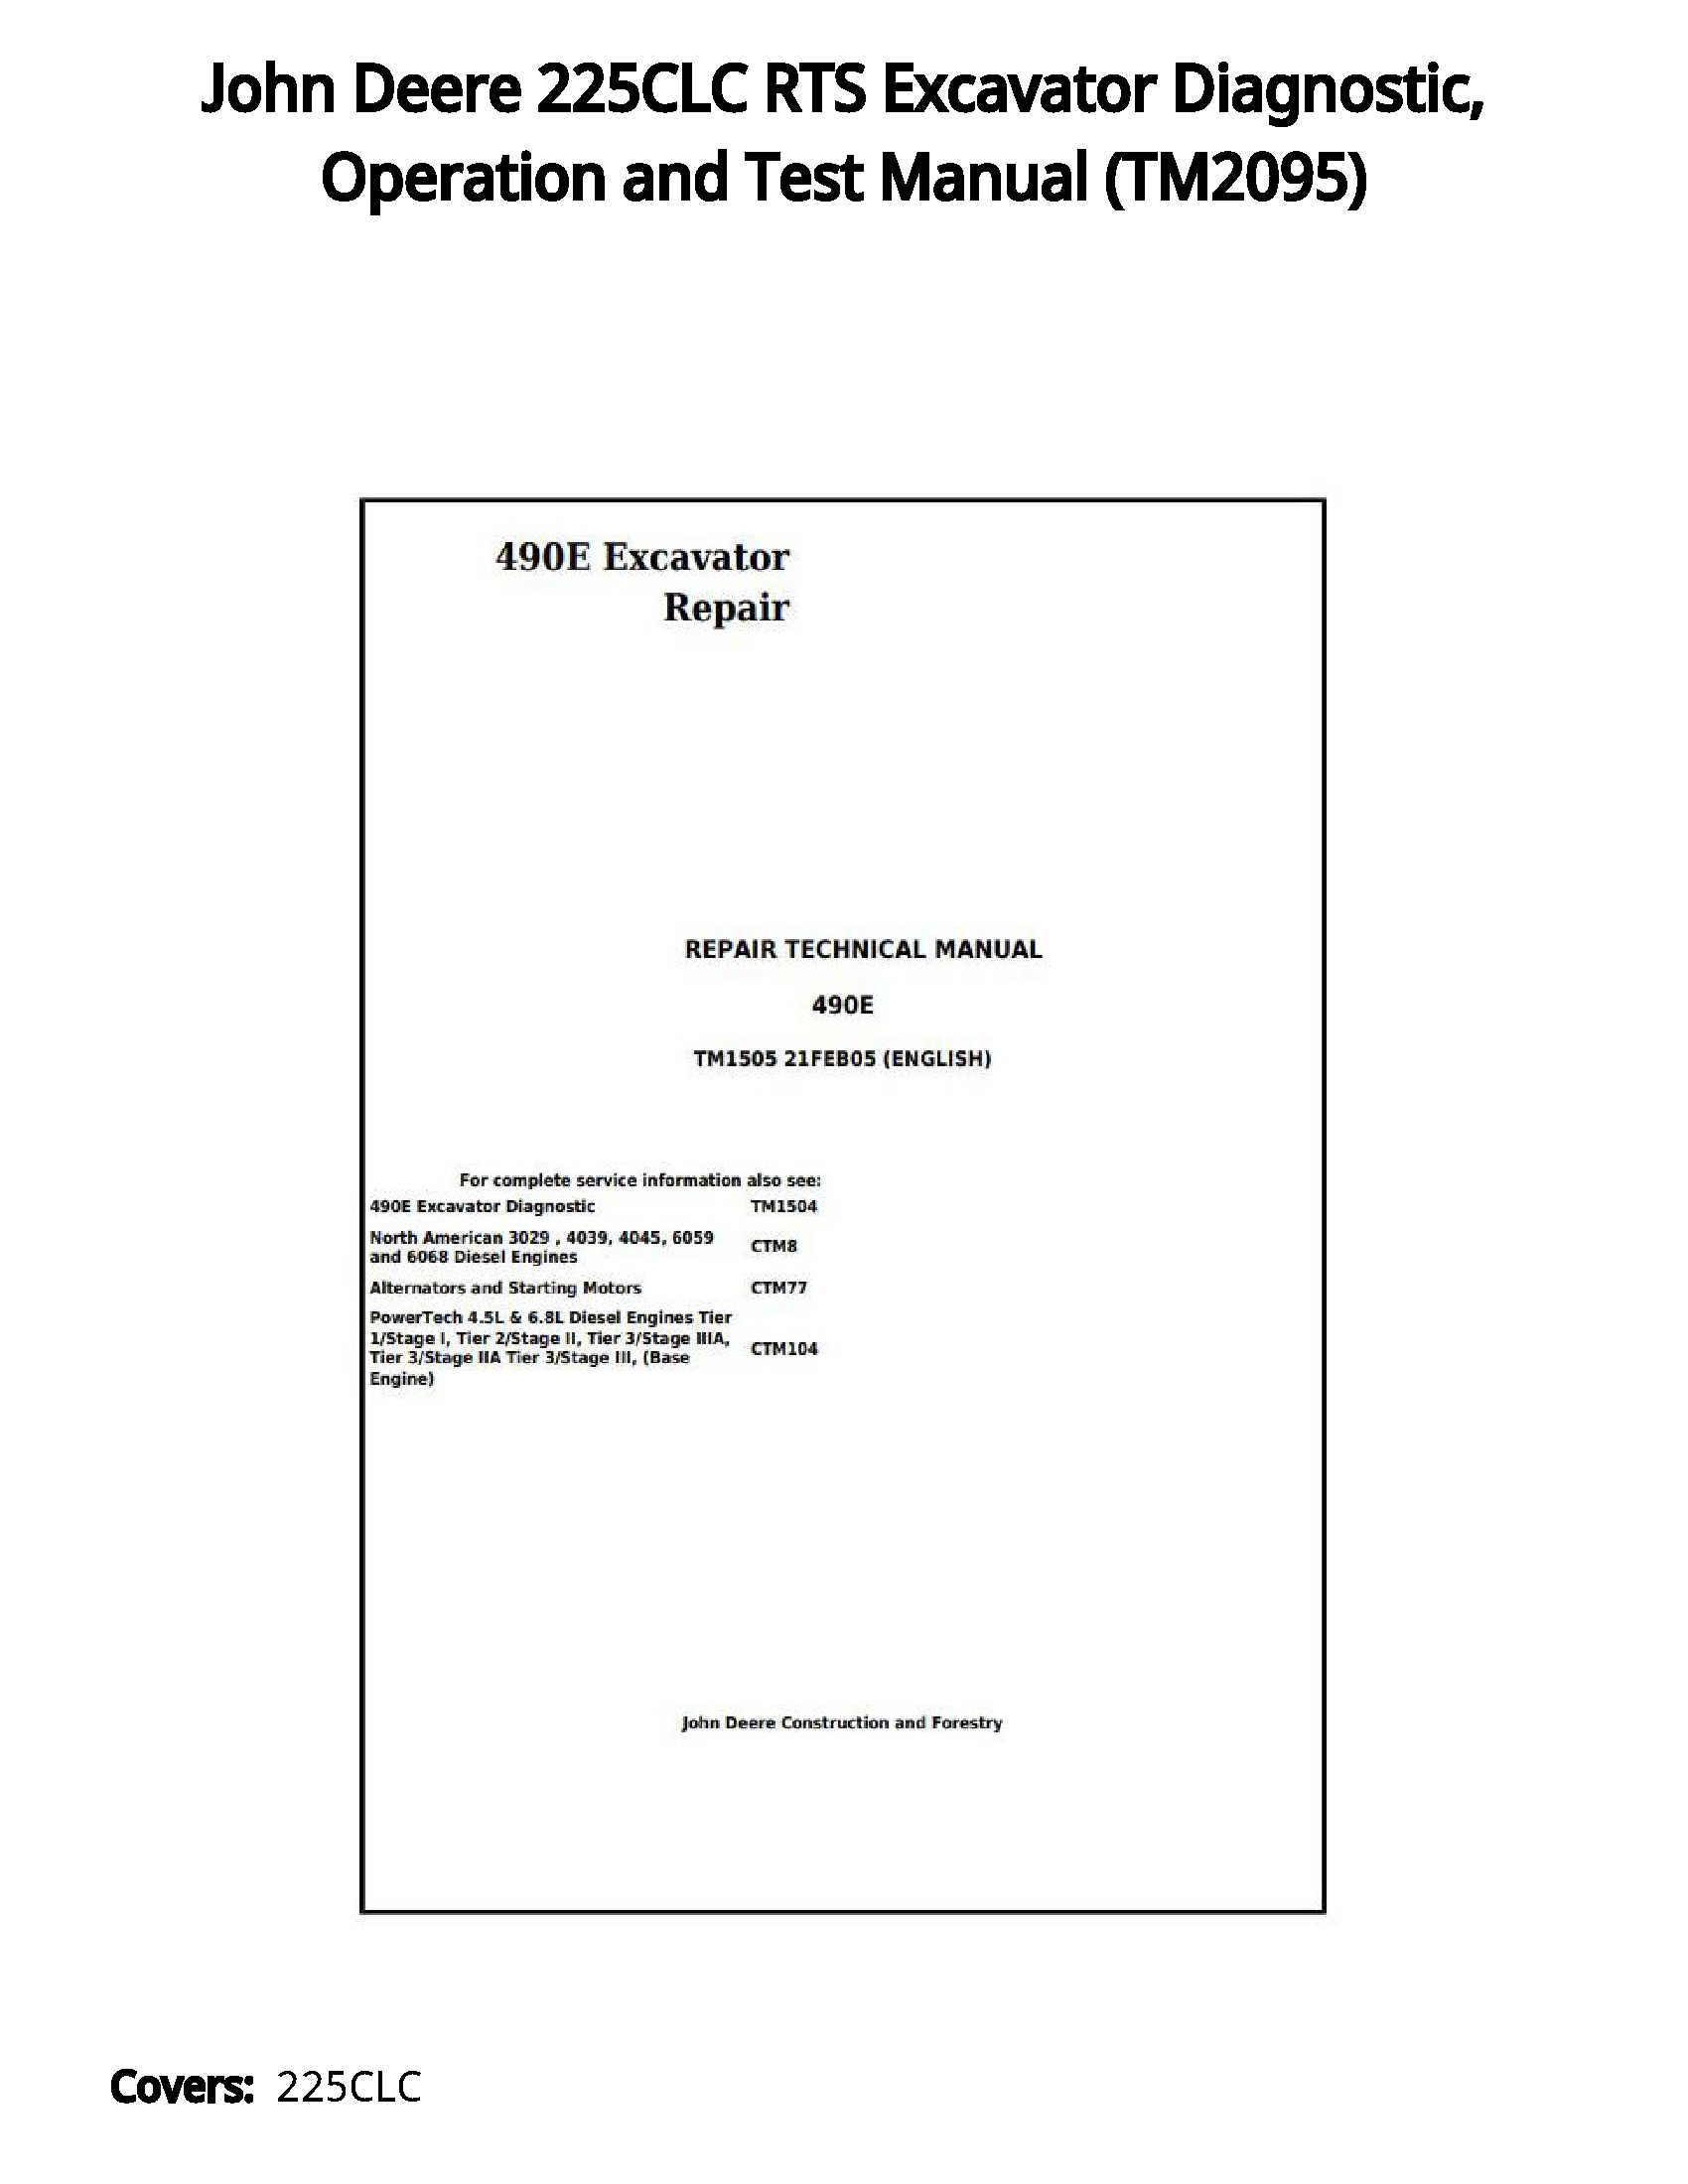 John Deere 225CLC RTS Excavator Diagnostic  Operation and Test Manual - TM2095